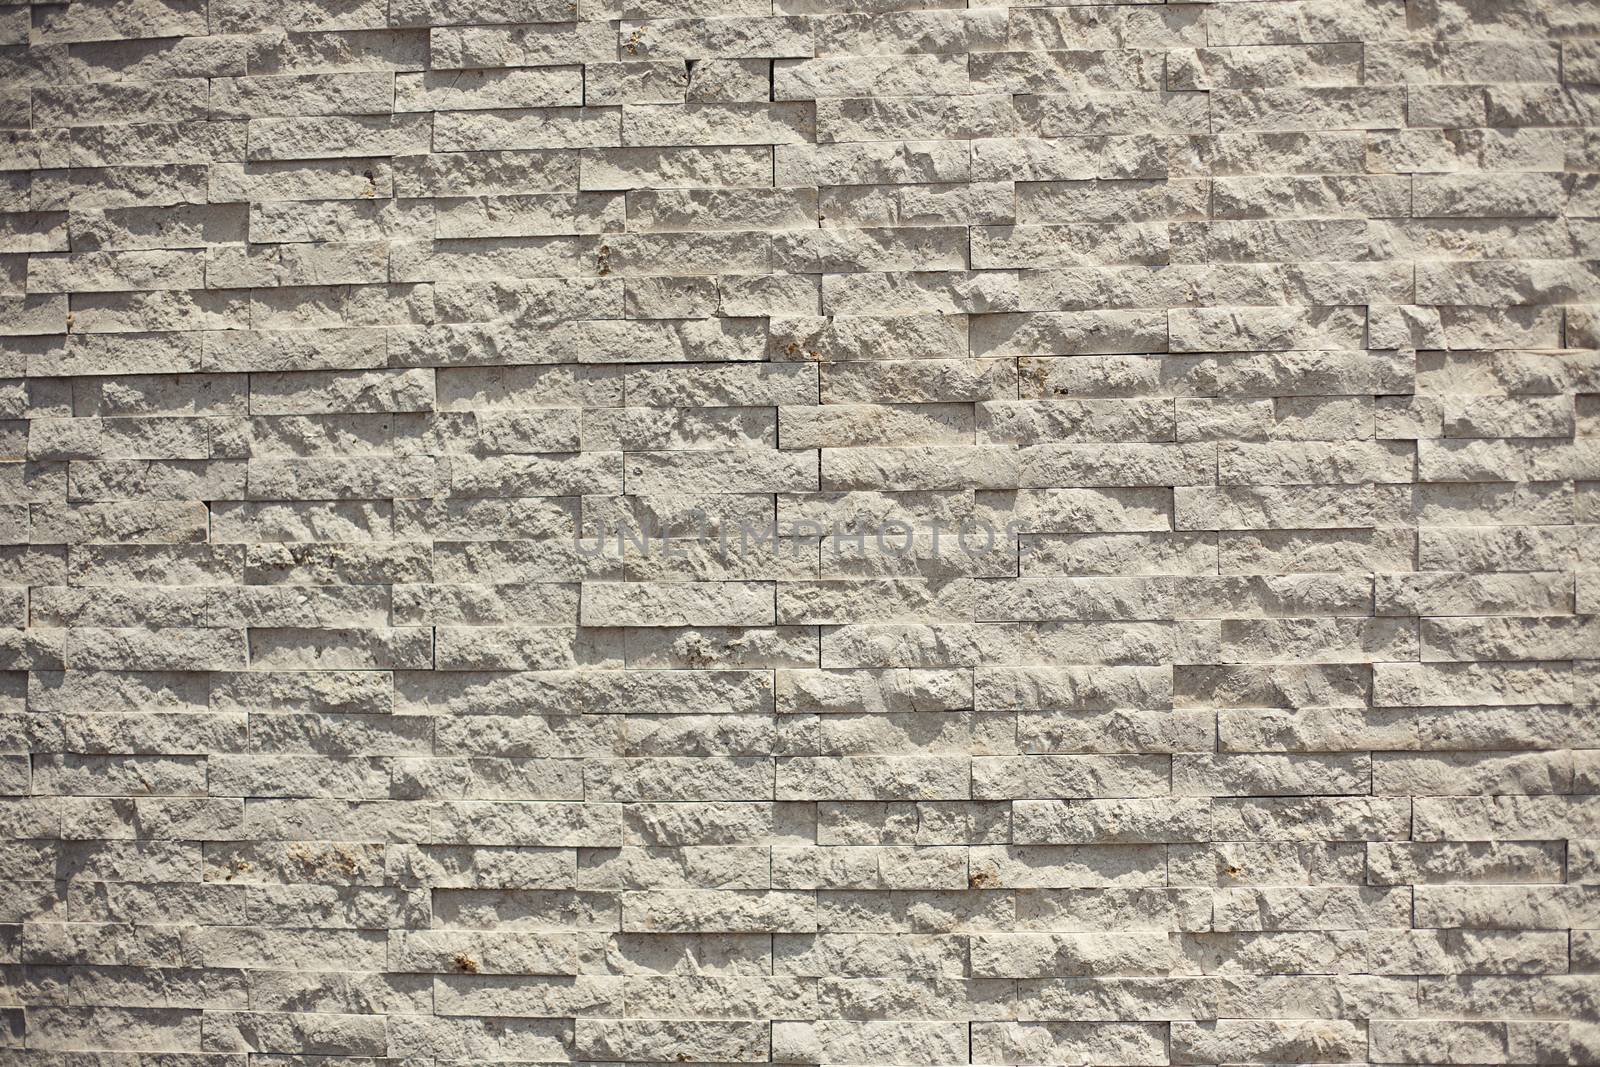 The modern wall pattern decorative brickwork background